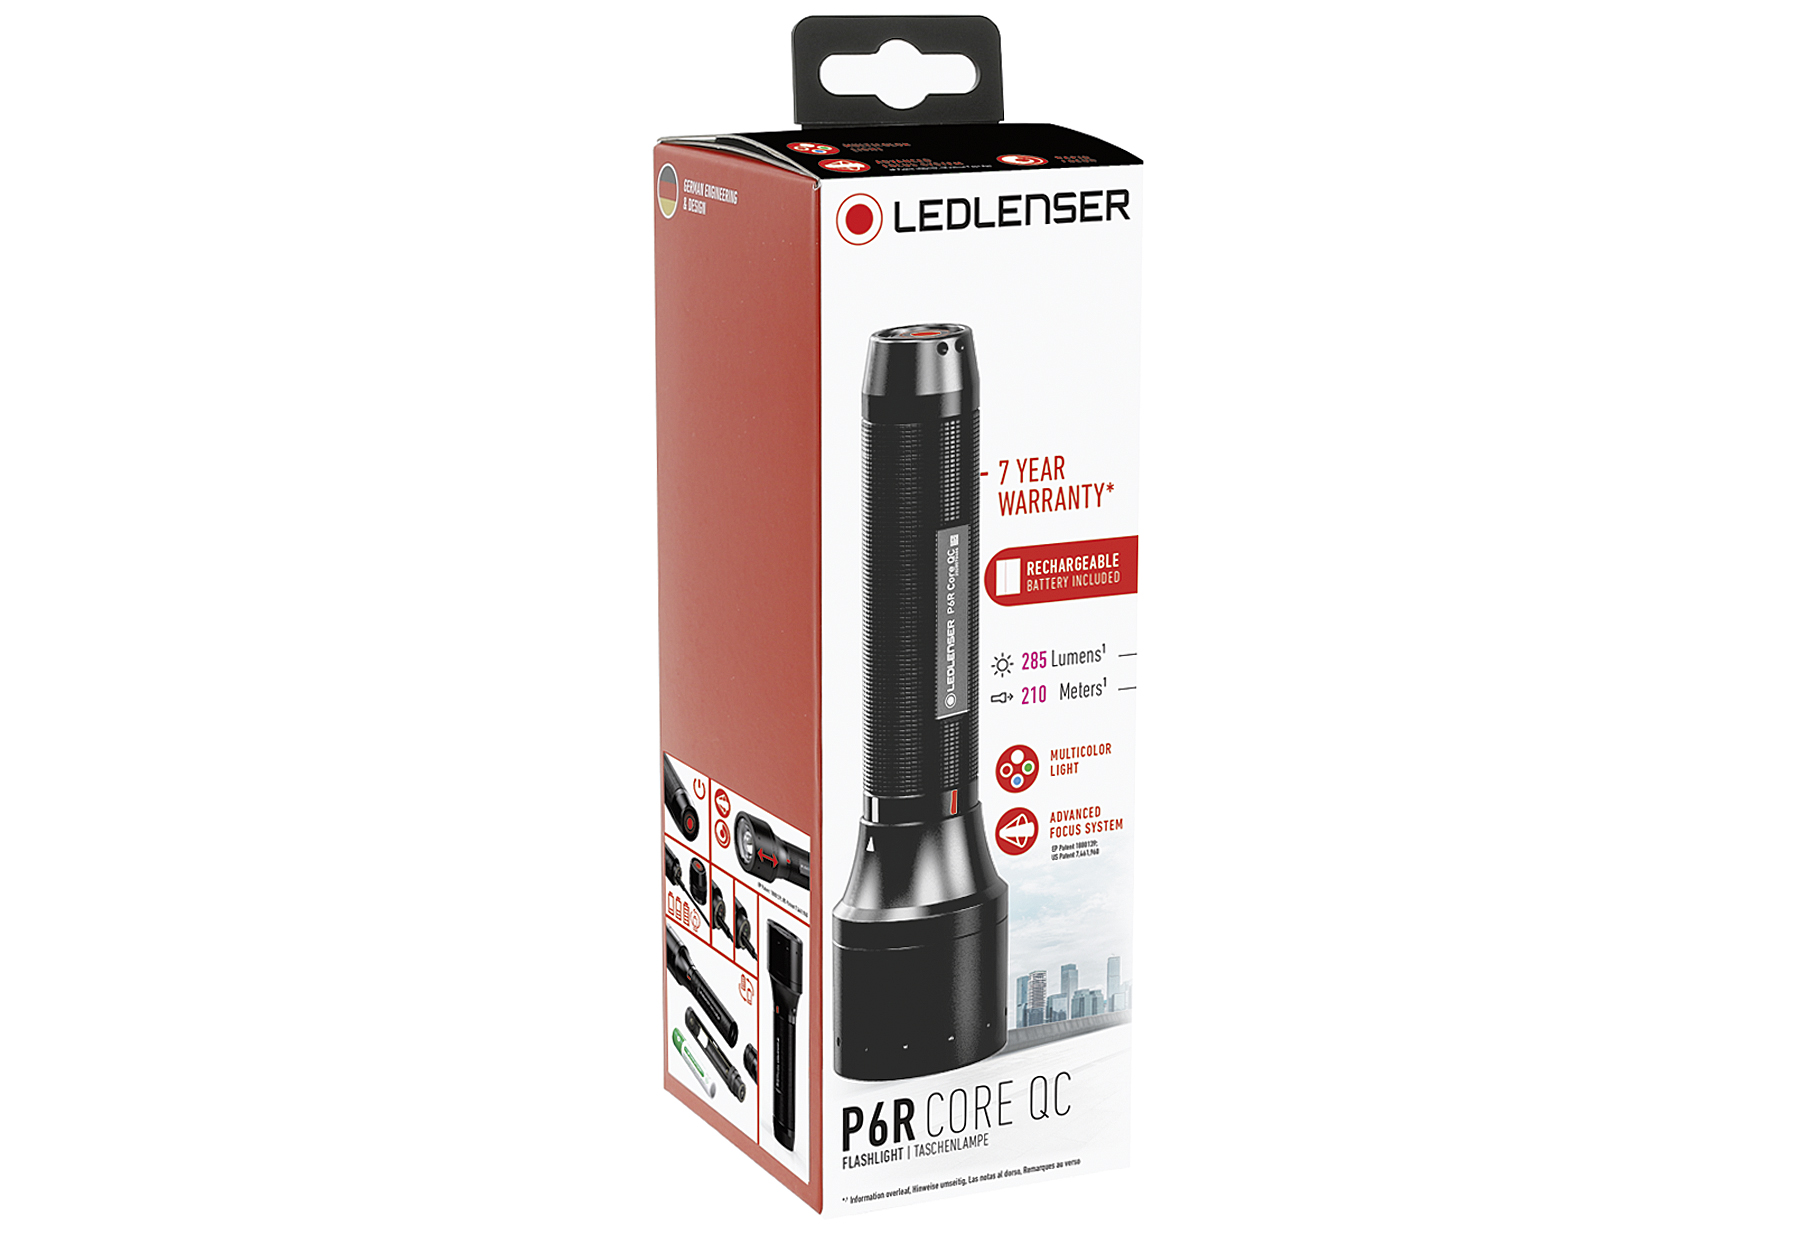 LED LENSER Taschenlampe P6R Core QC Box 4 Farblicht